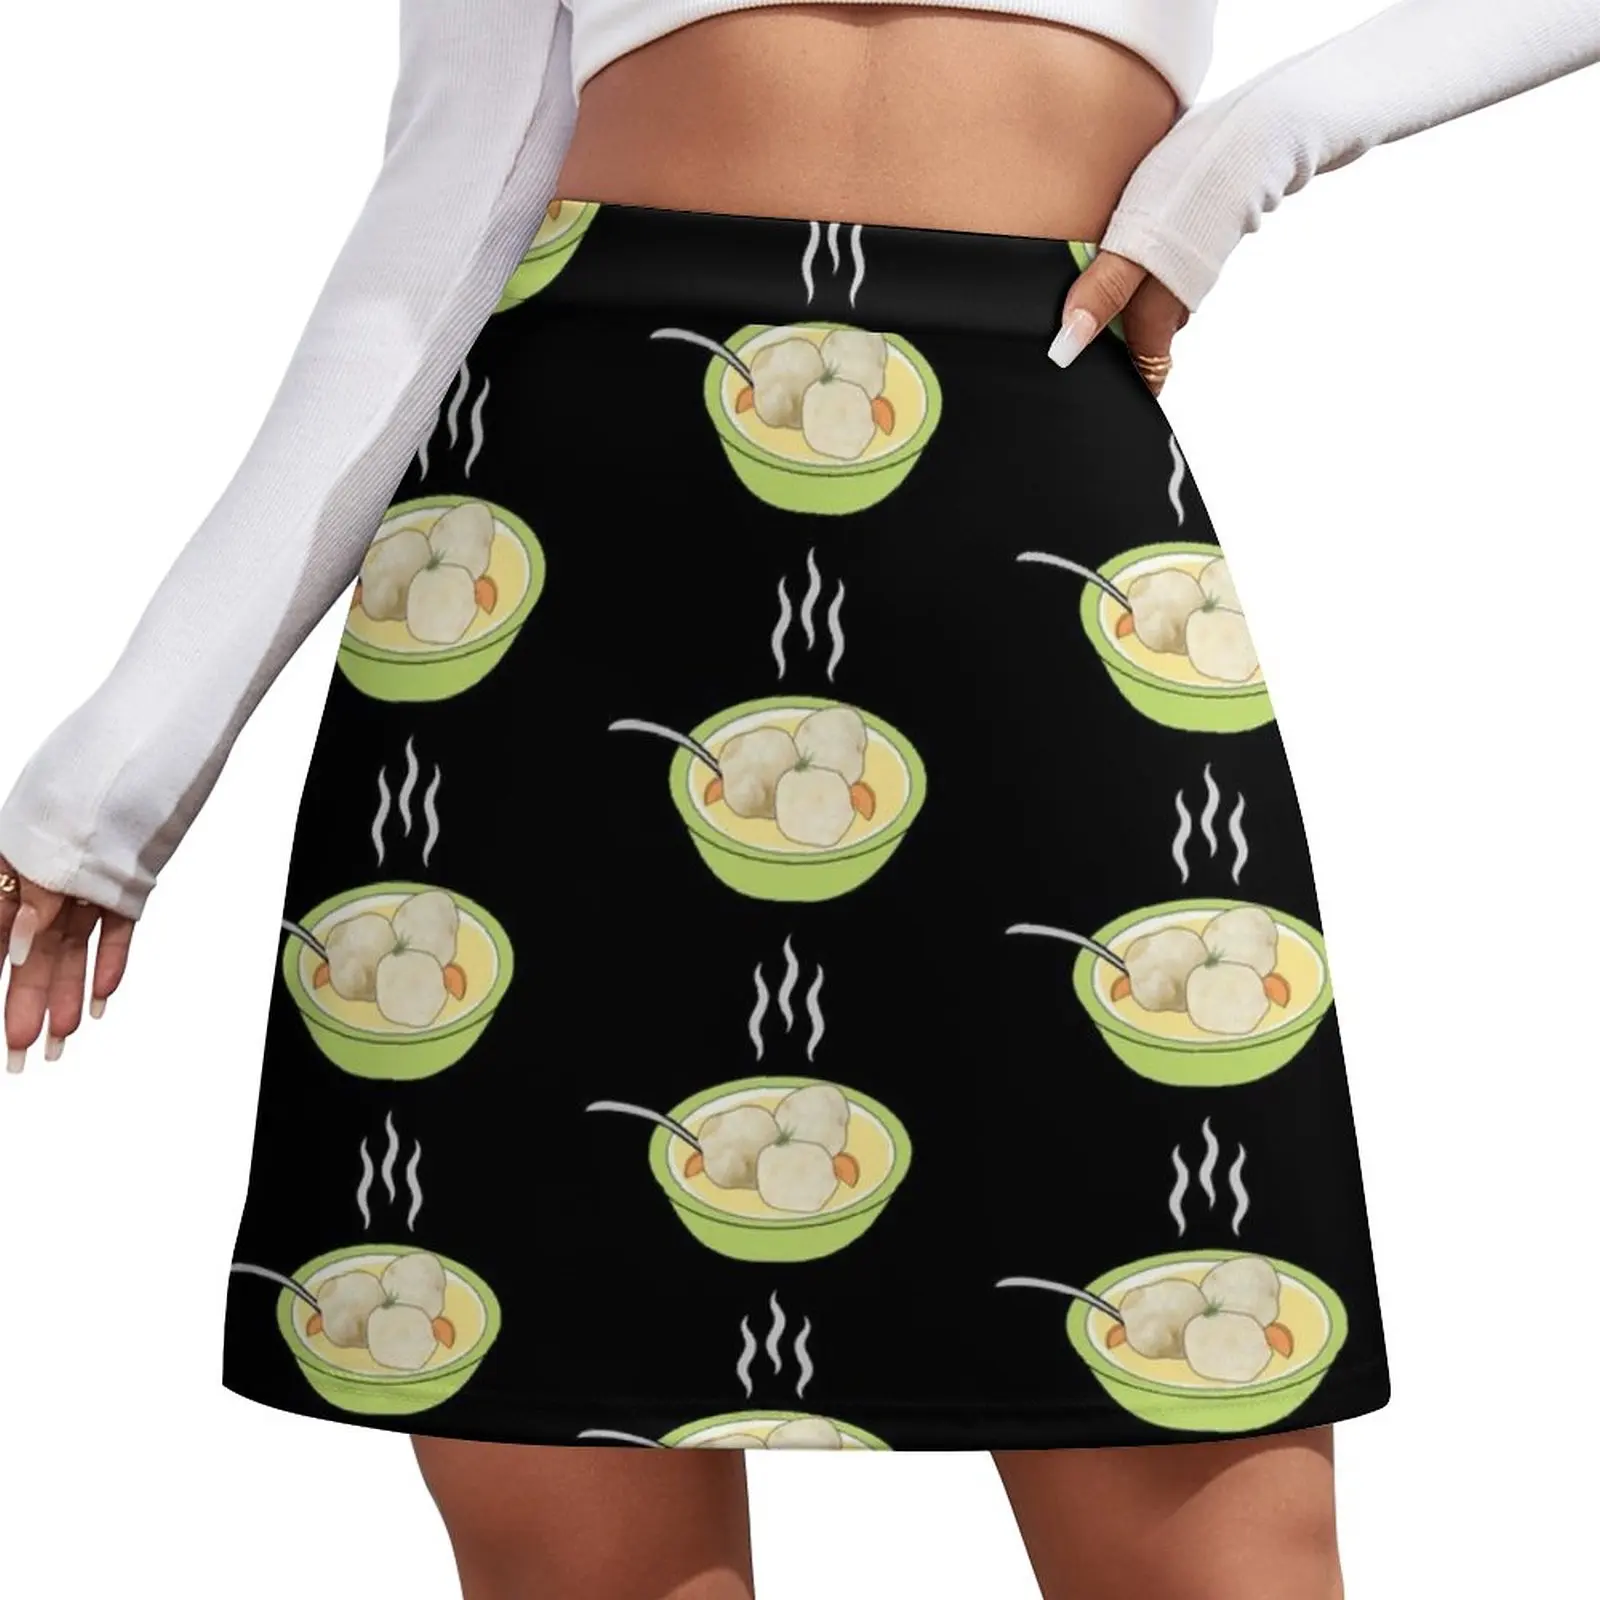 Matzo Ball Soup Jewish Food Mini Skirt Women's skirt skirt for women Skirt shorts jerusalem menorah religion jewish menorah